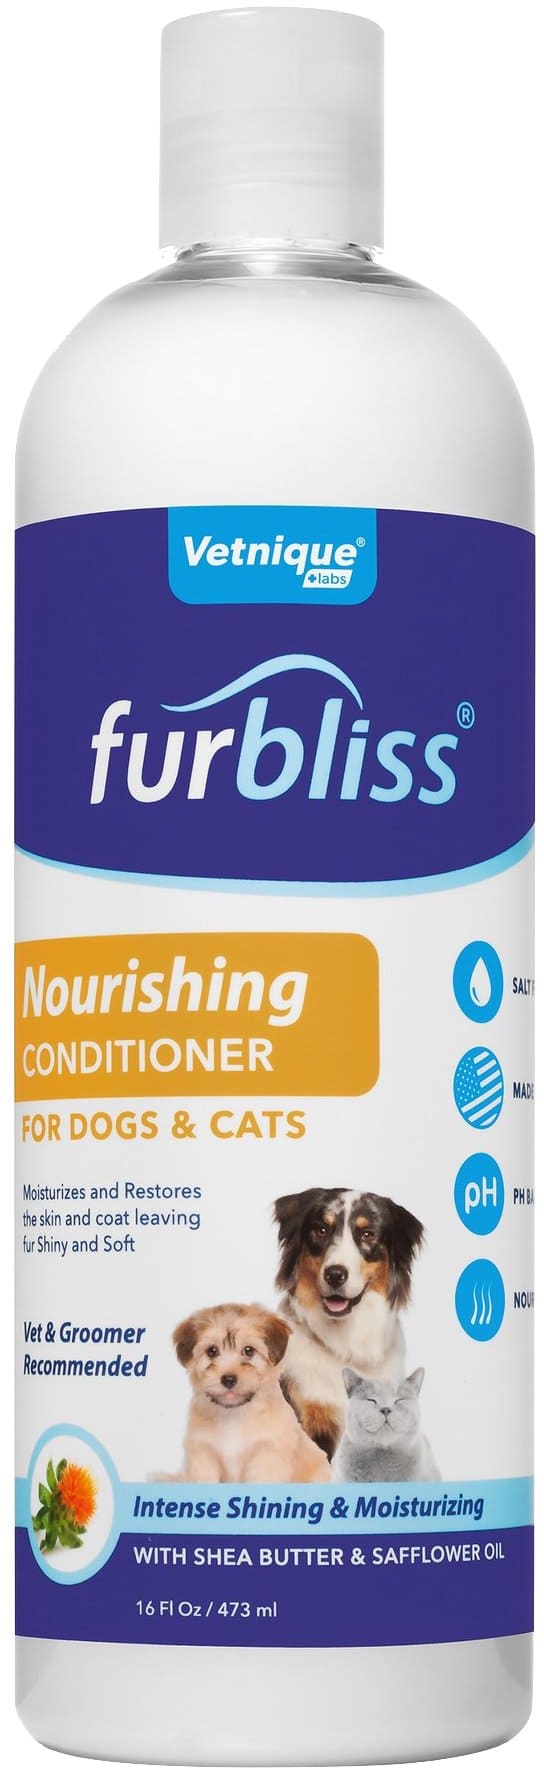 Furbliss Nourishing Conditioner